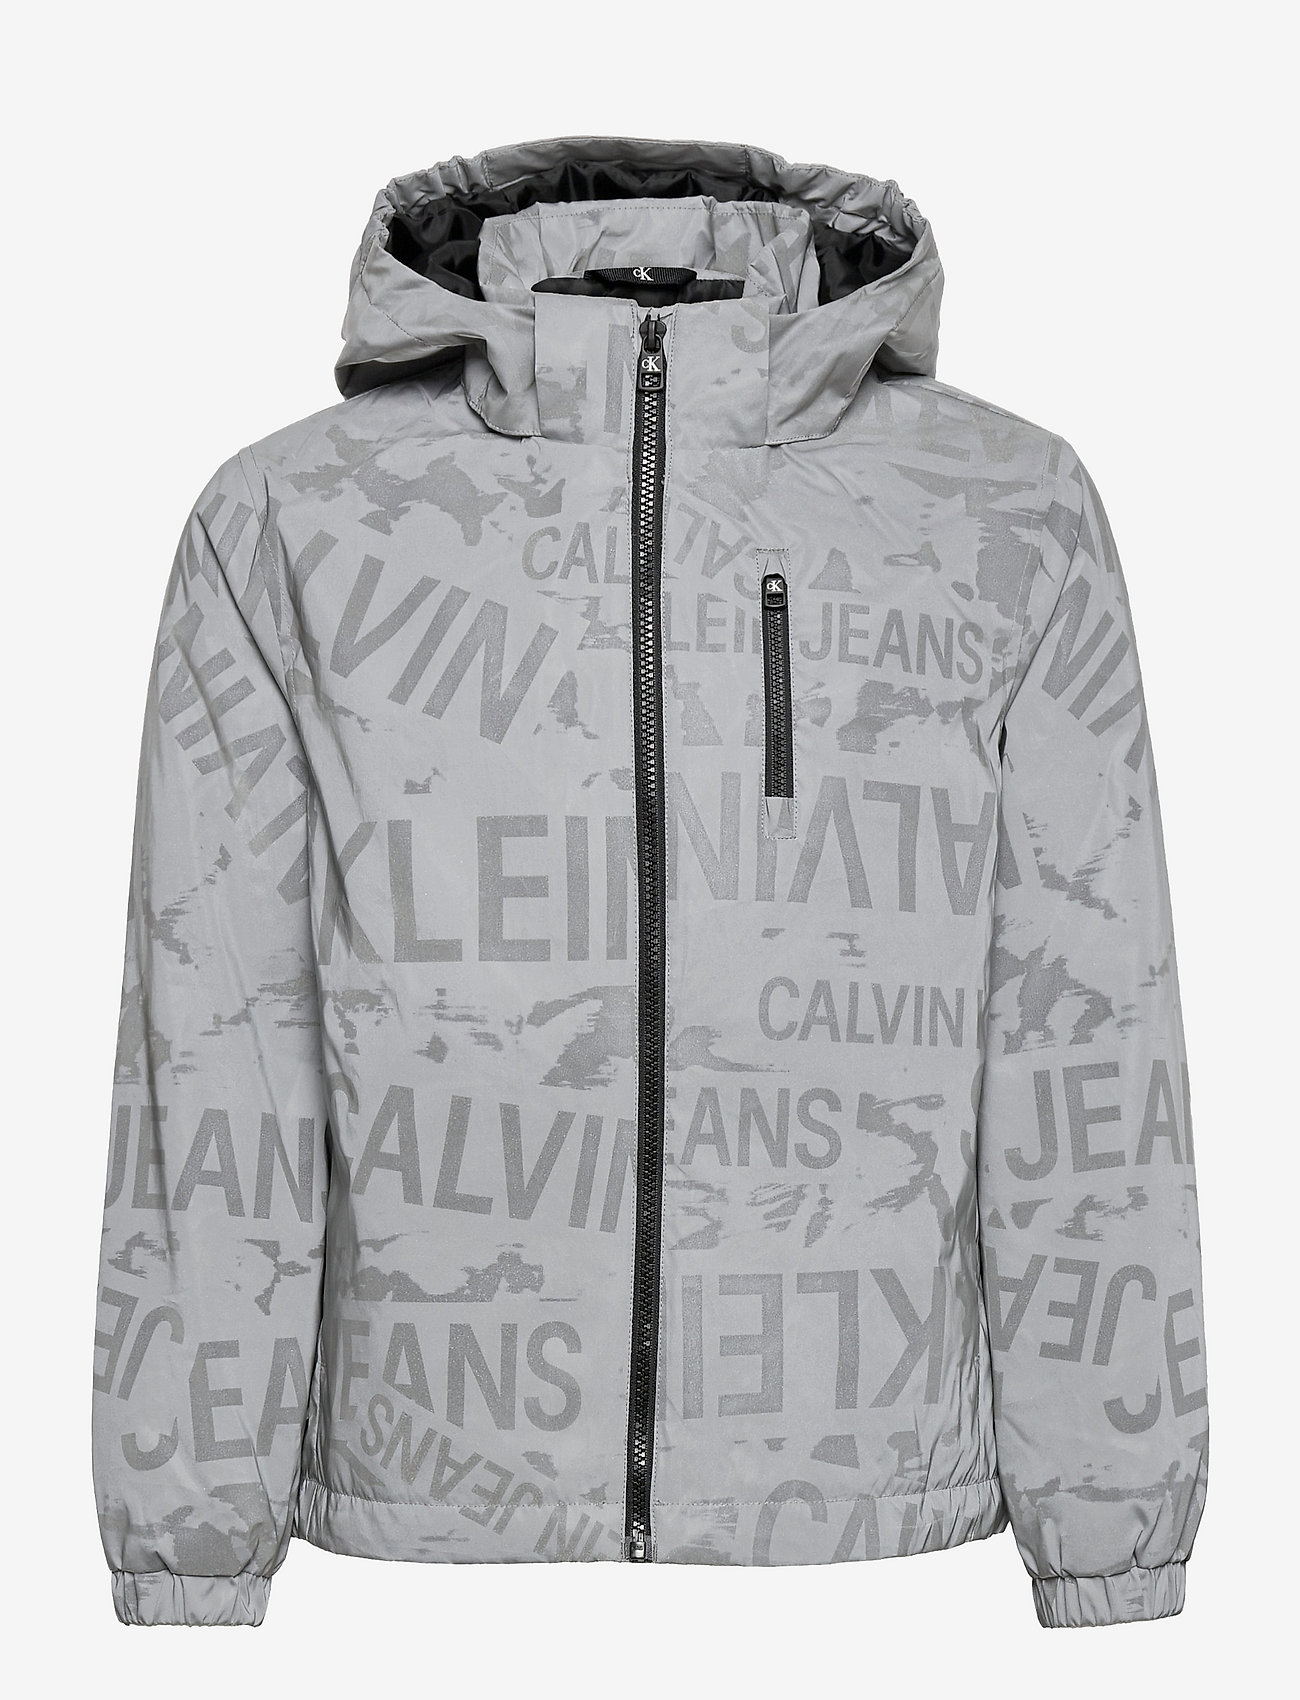 Calvin Klein Reflective Logo Jacket (Grey Reflective Aop), ( €) |  Large selection of outlet-styles 